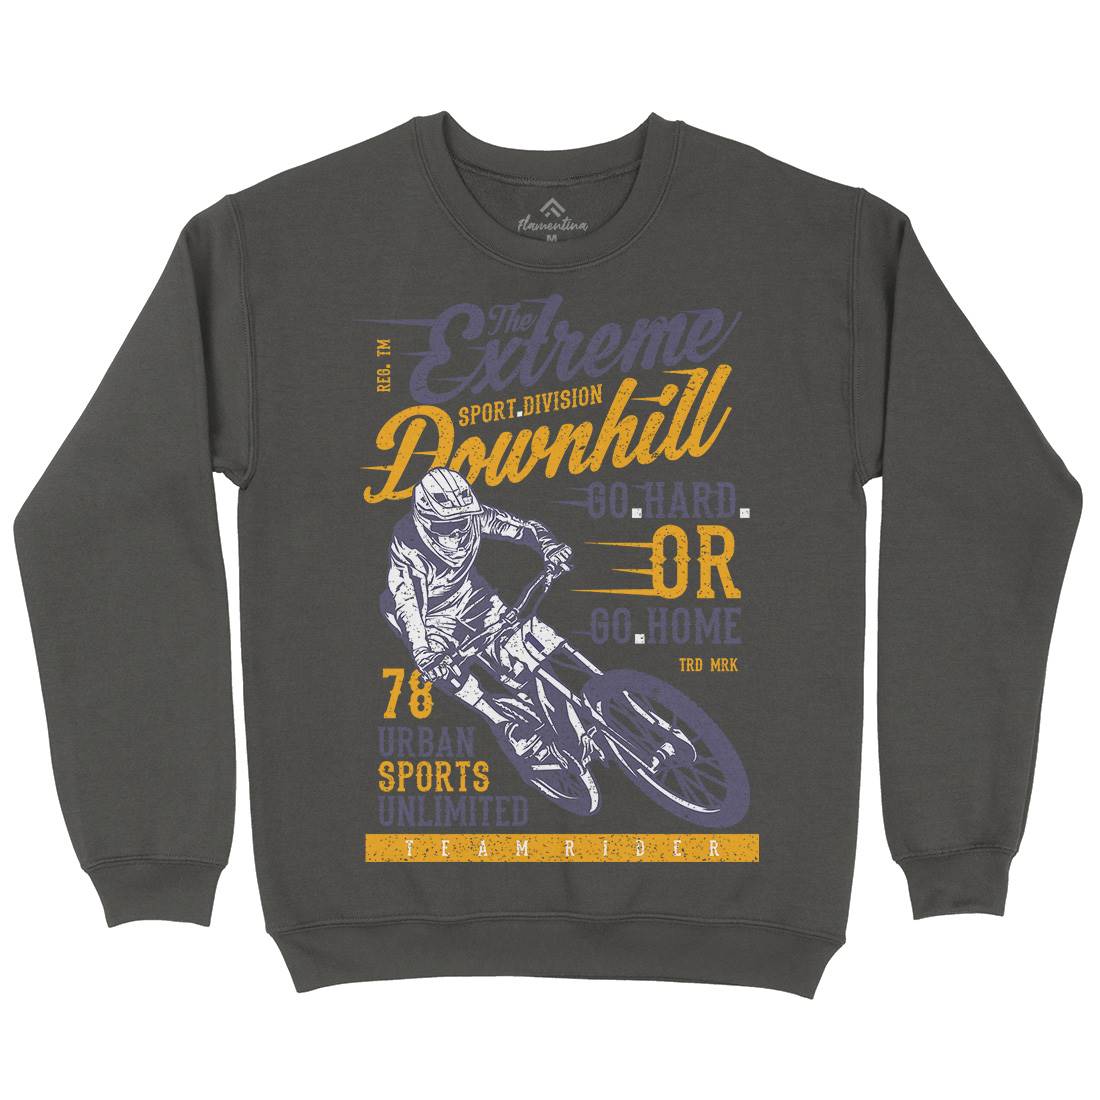 Extreme Downhill Mens Crew Neck Sweatshirt Bikes A772